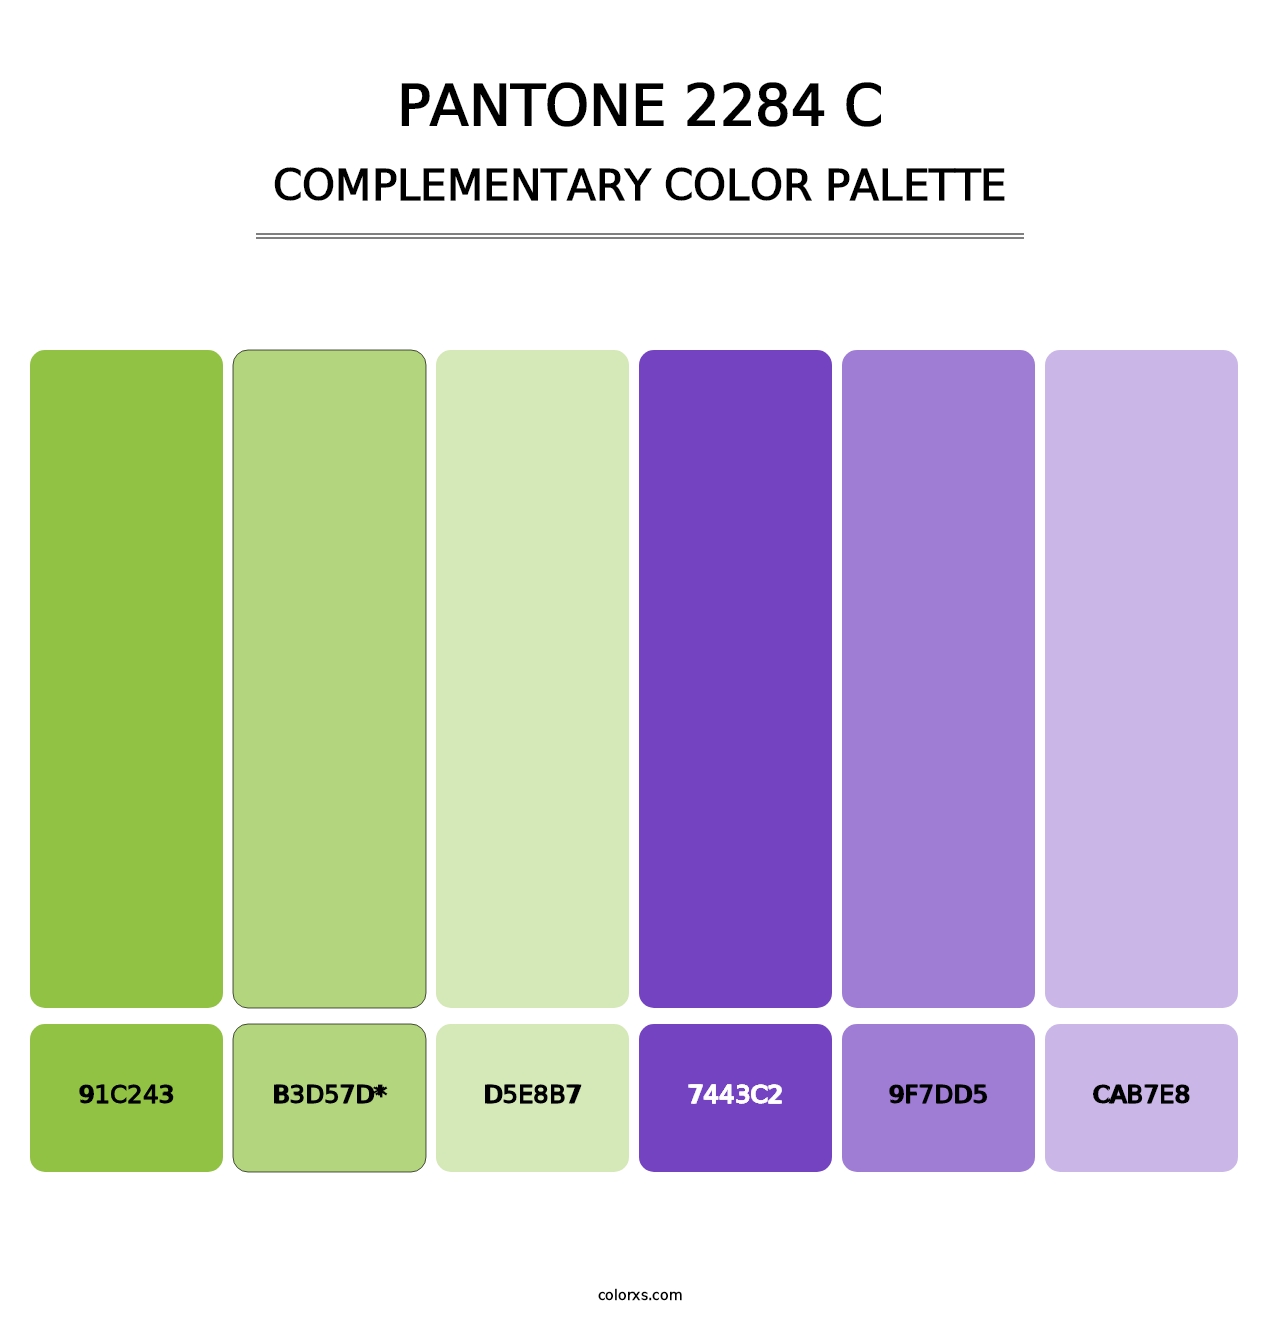 PANTONE 2284 C - Complementary Color Palette